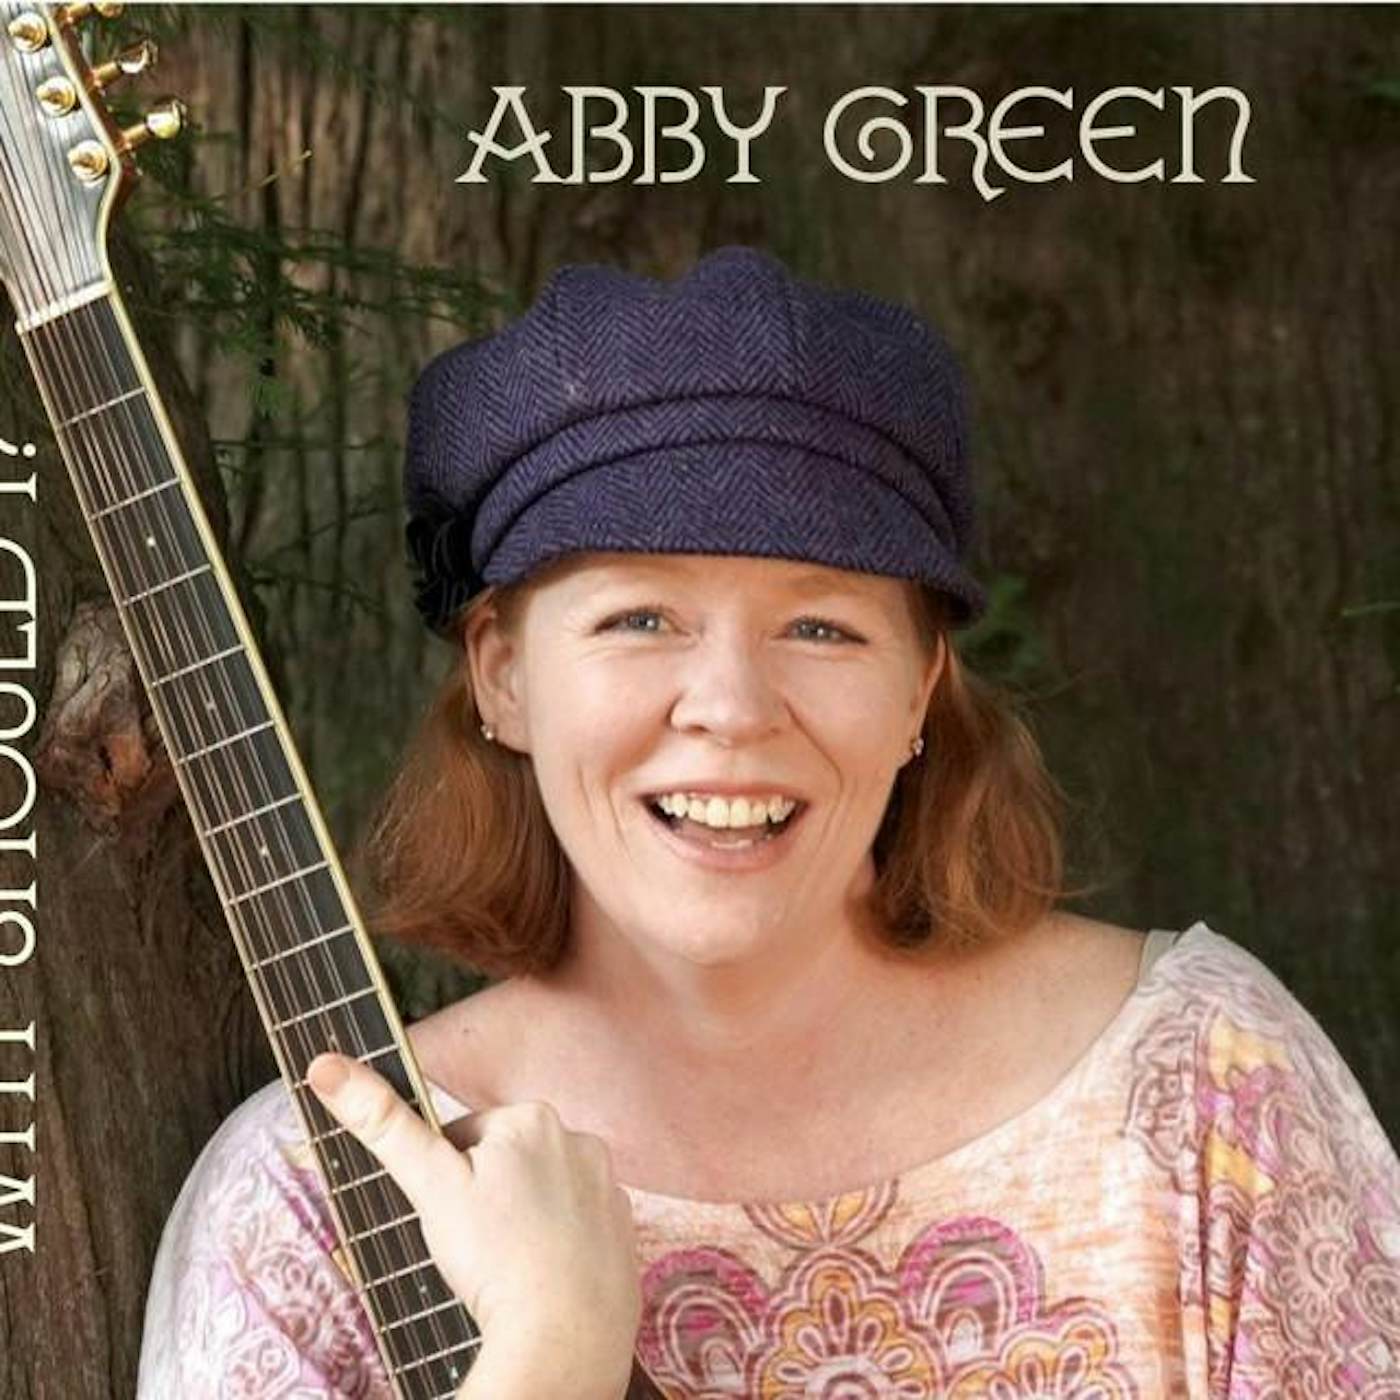 Abby Green